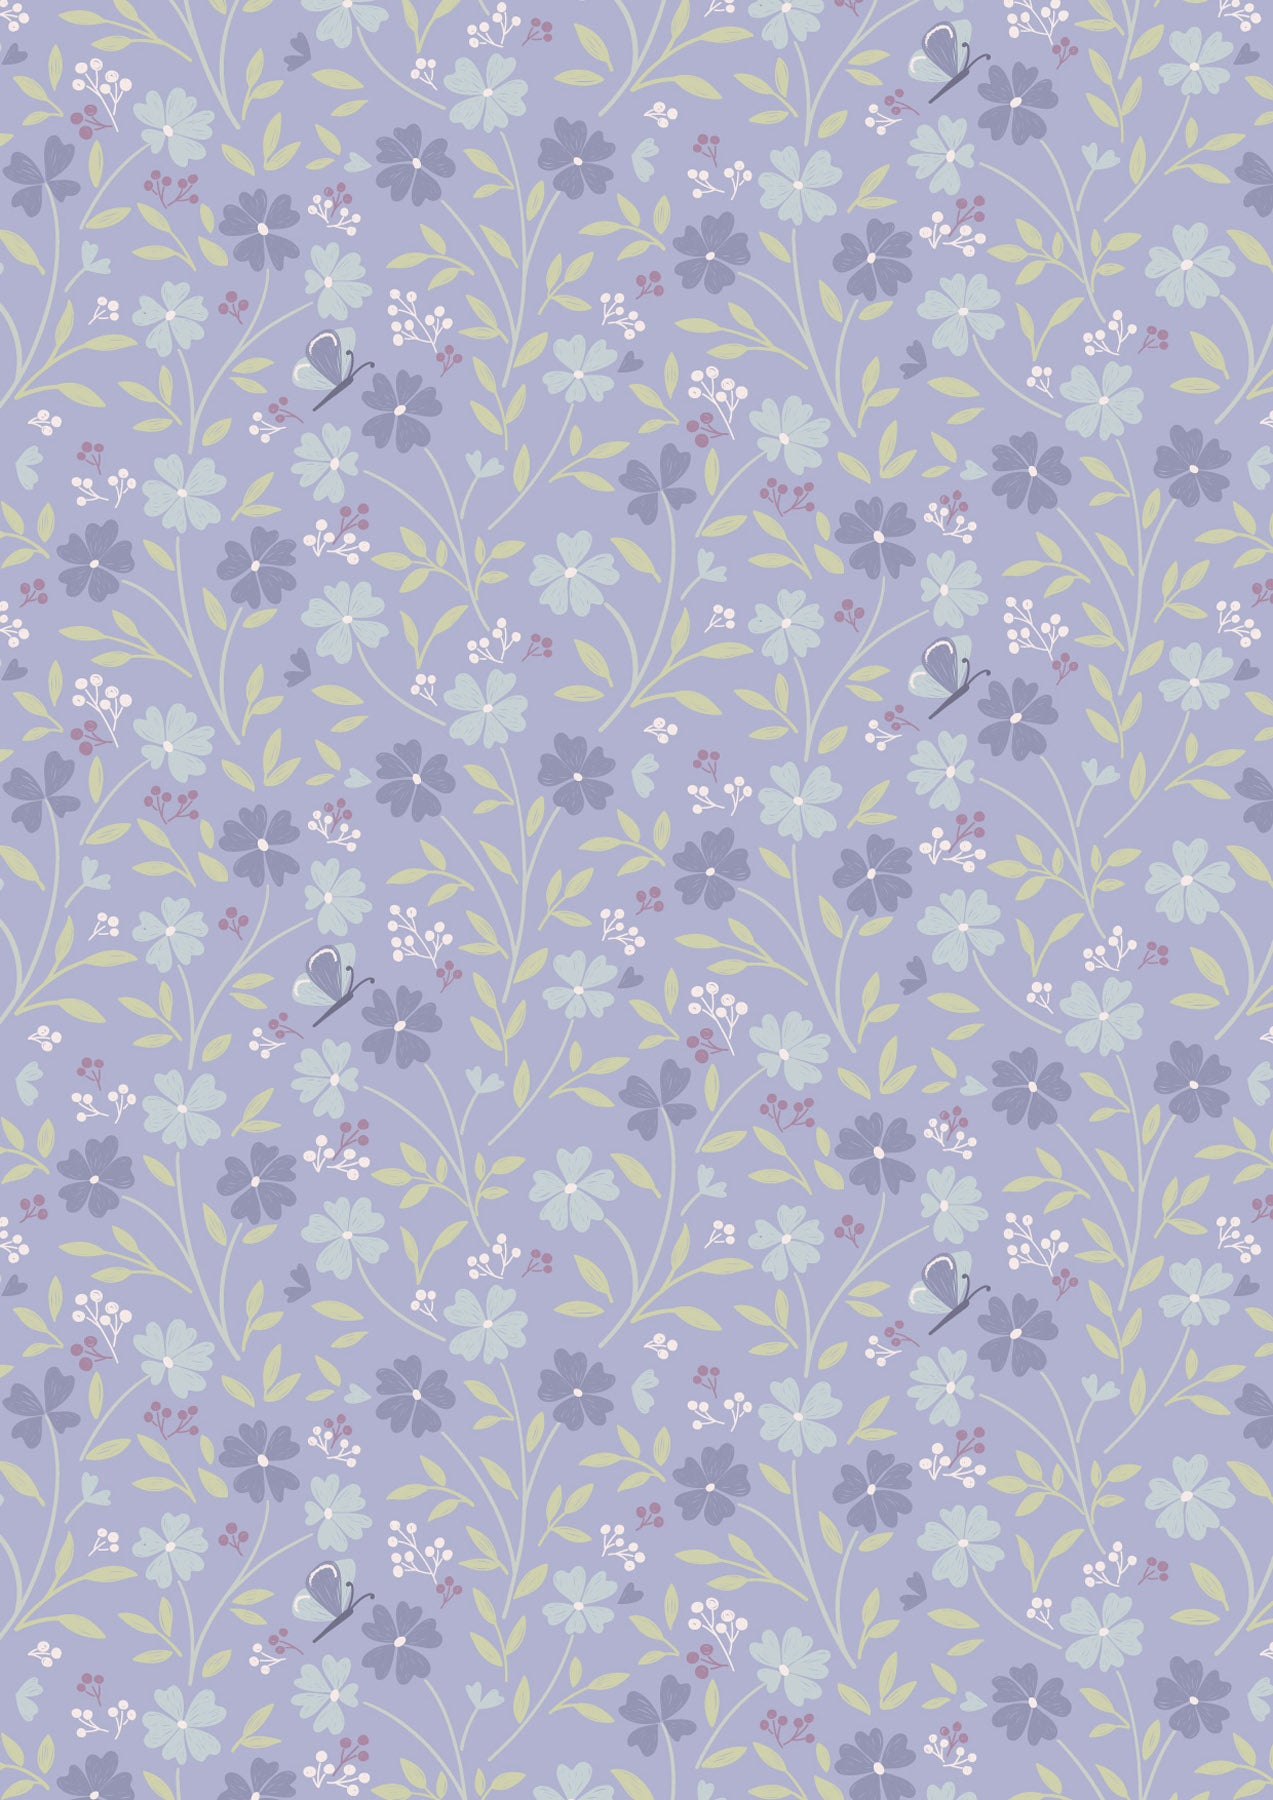 Little Blossom on Lavender Blue - Floral Song